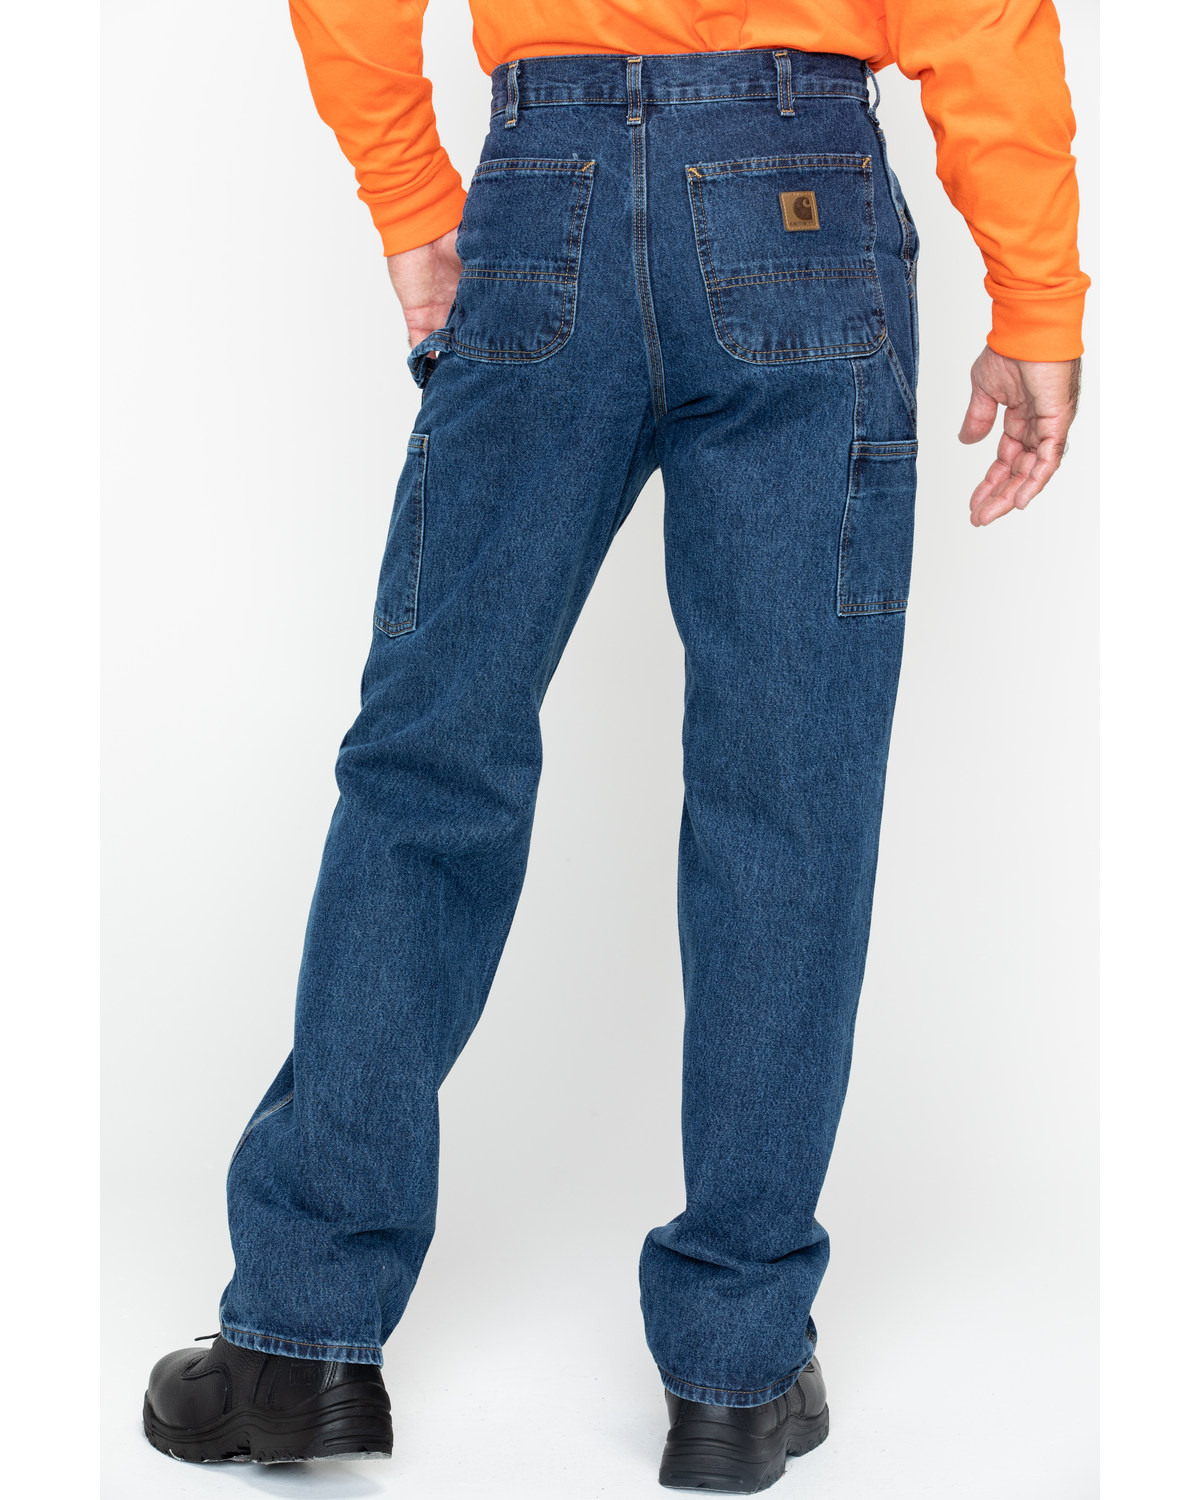 carhartt jeans fit